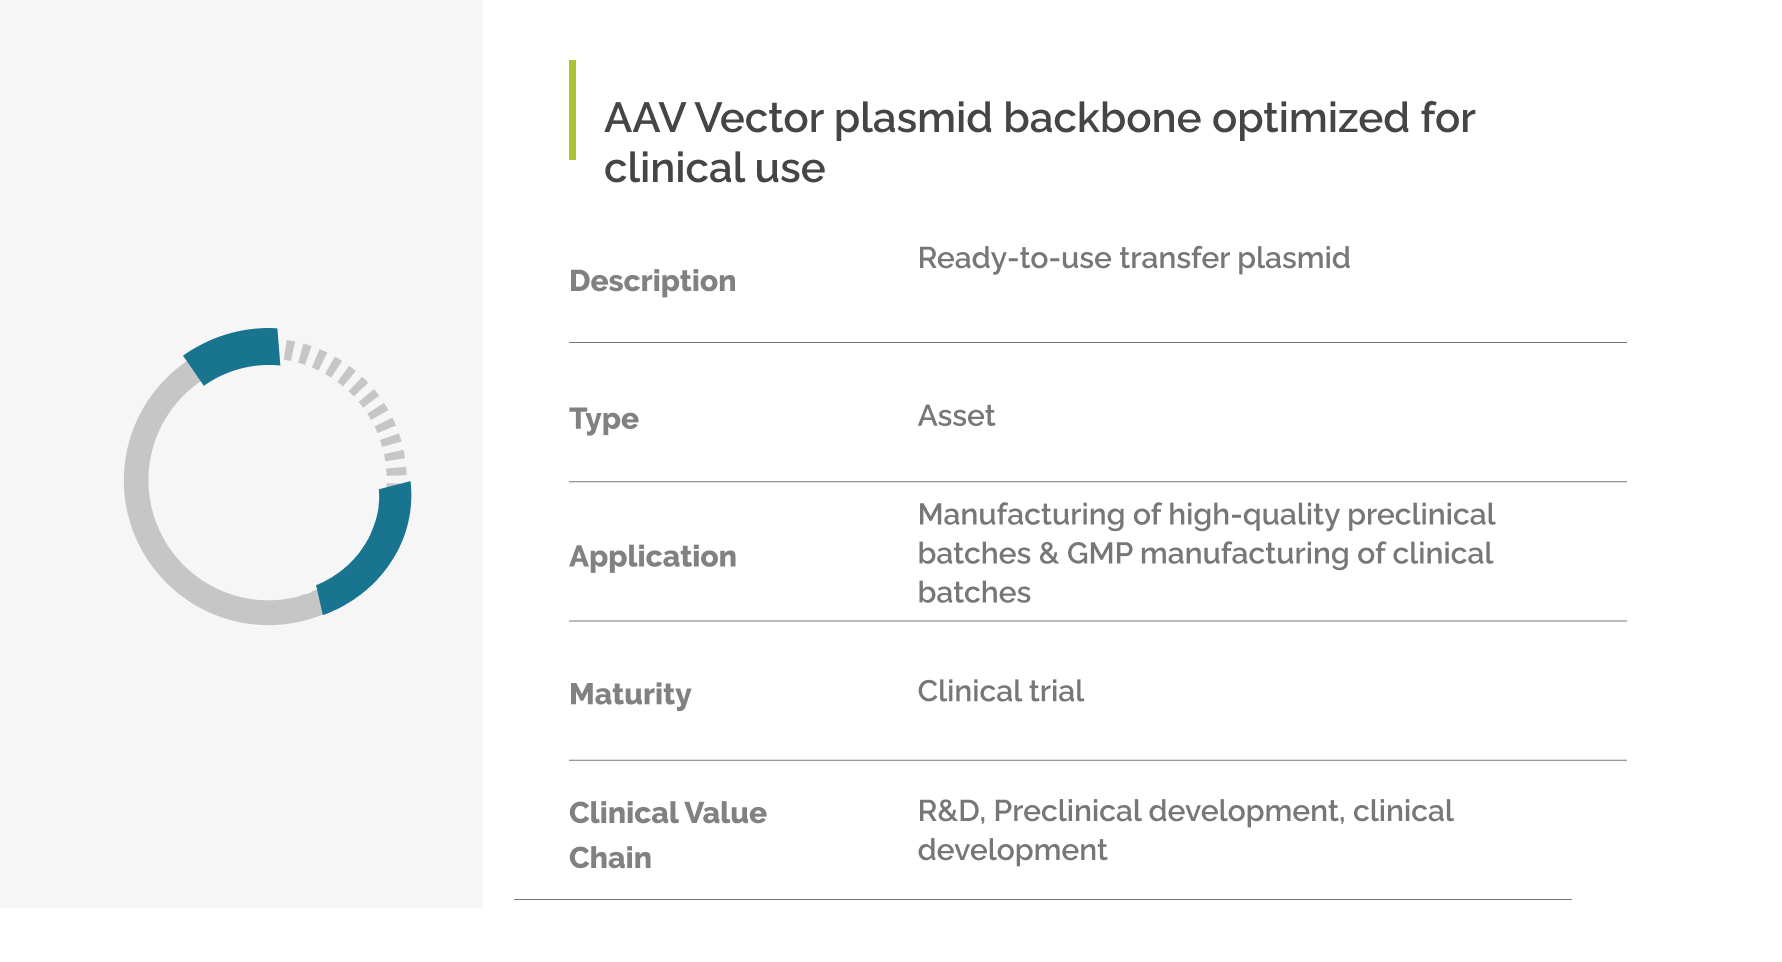 AAV Vector plasmid backbone optimized for clinical useTable